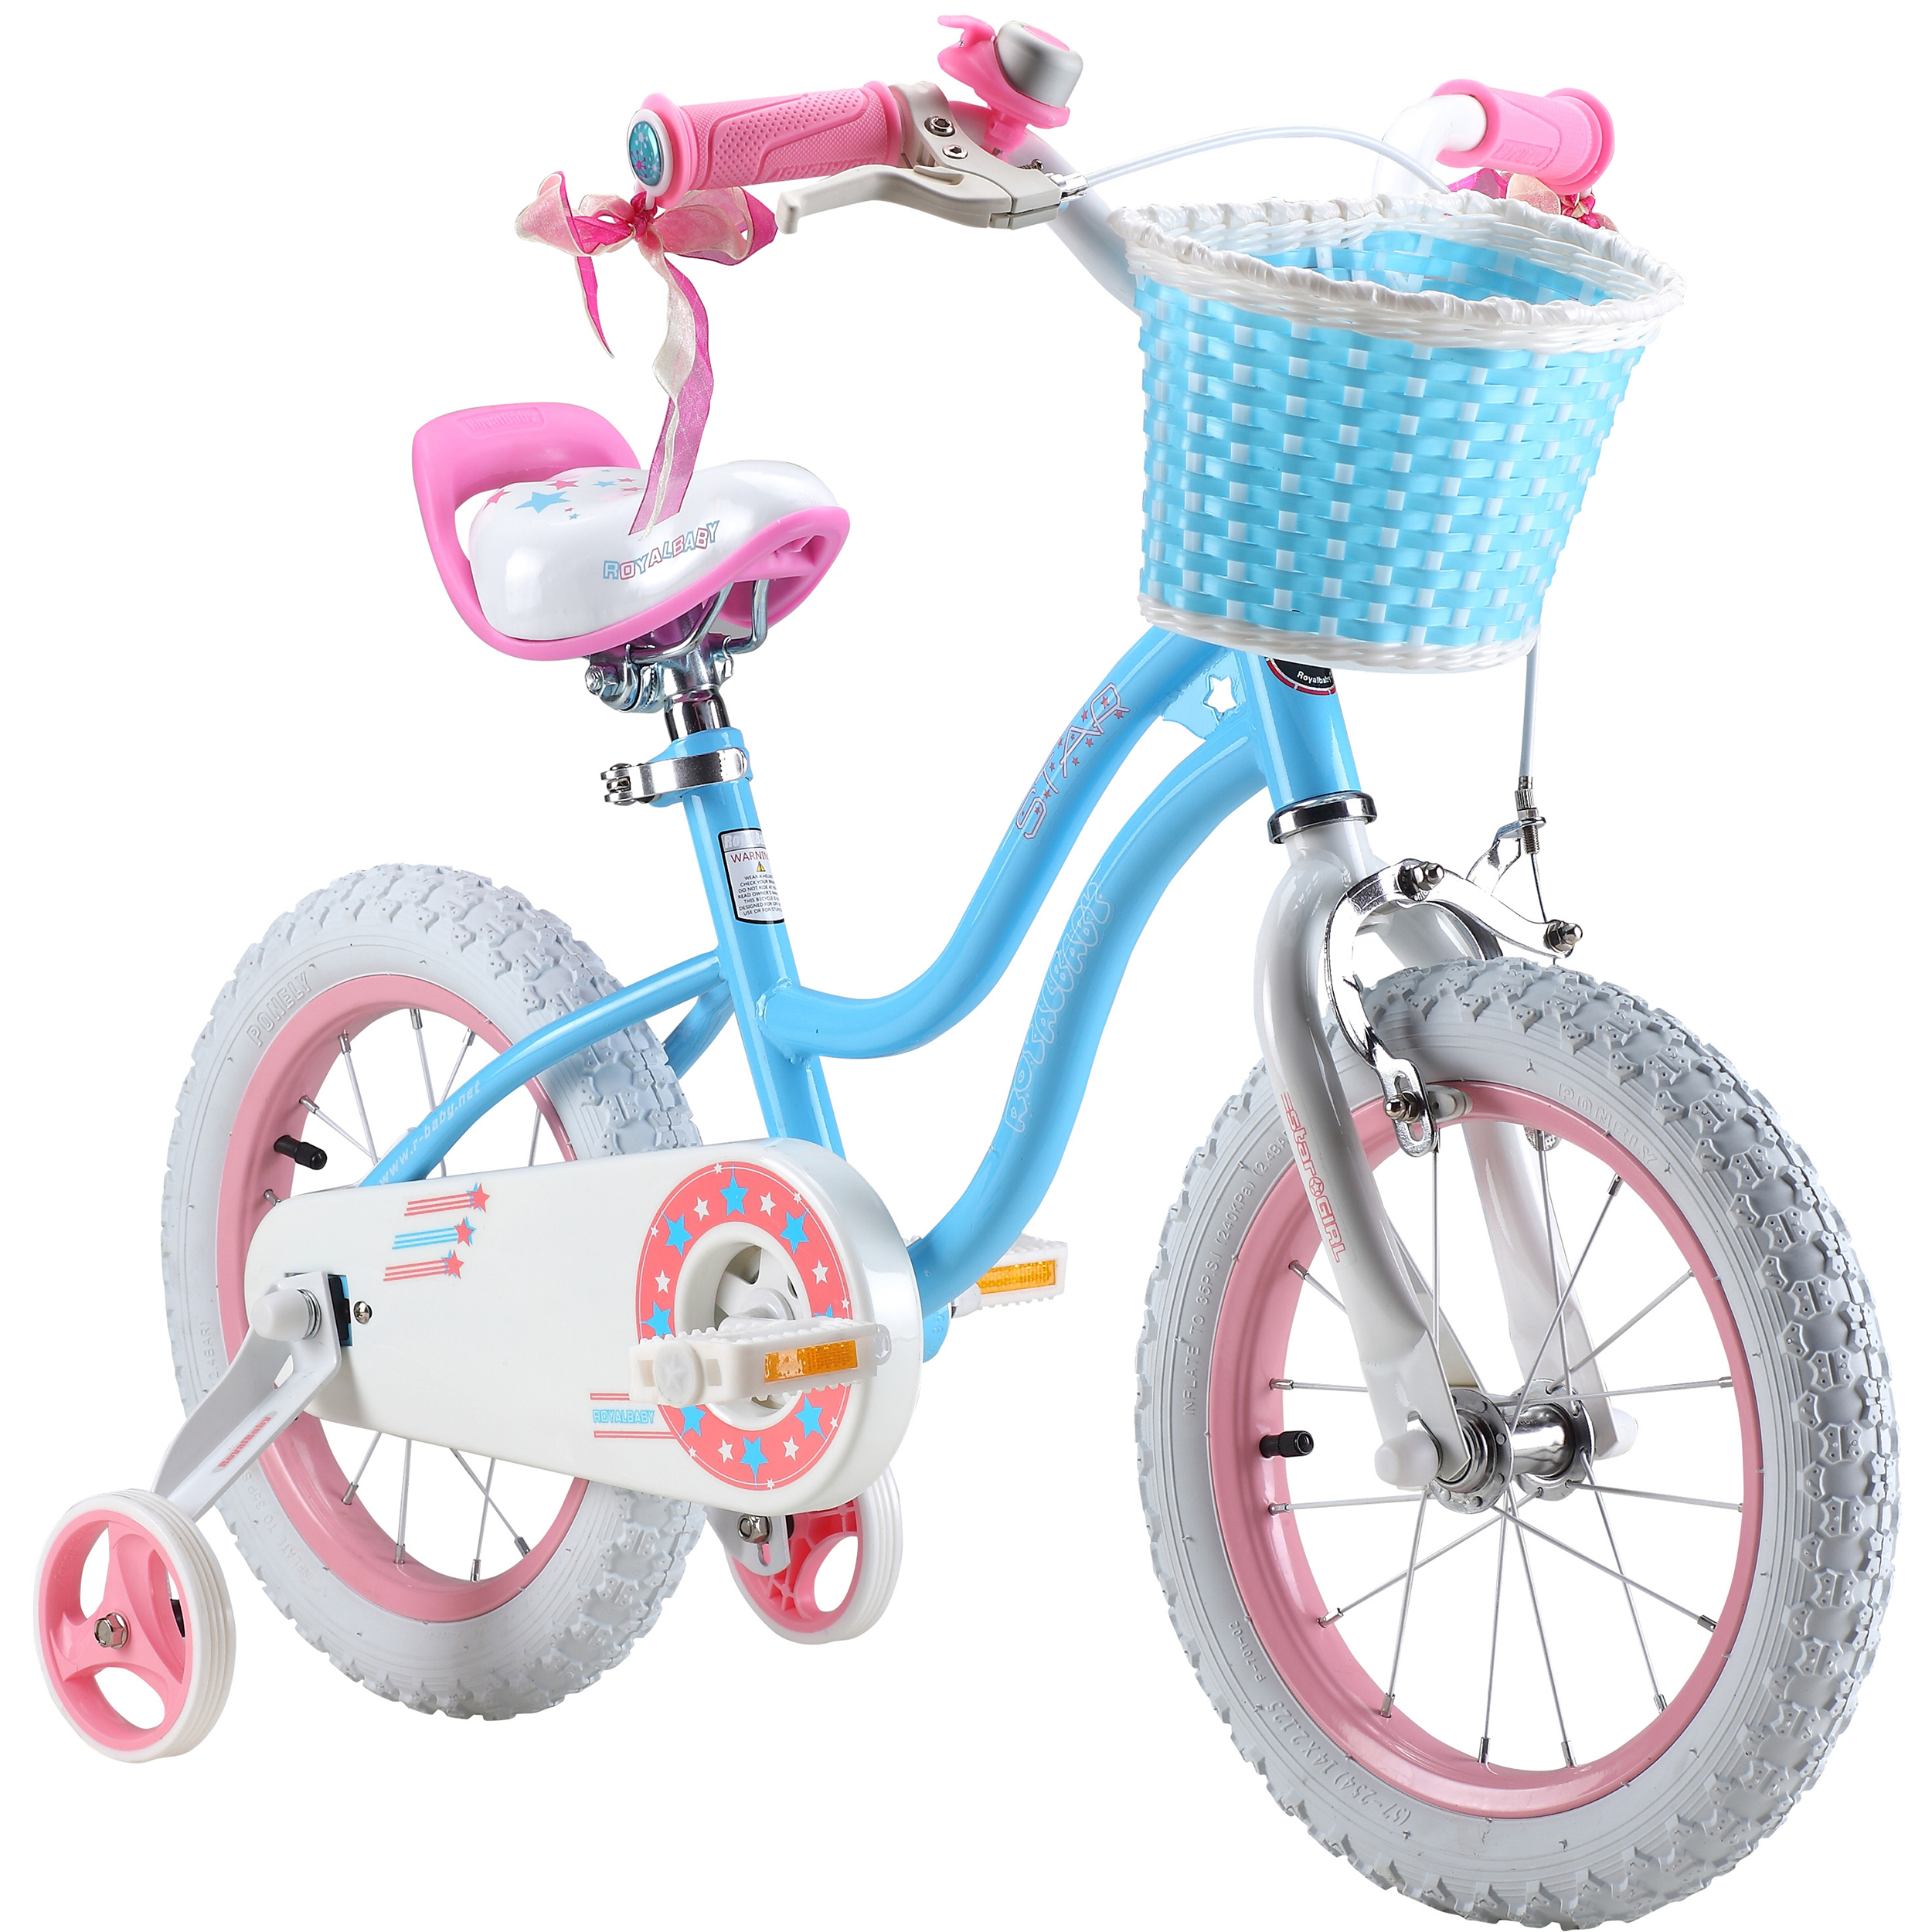 Royalbaby Stargirl Girls Bike With Training Wheels And Basket, Perfect Gift For Kids 12 Inch -5513